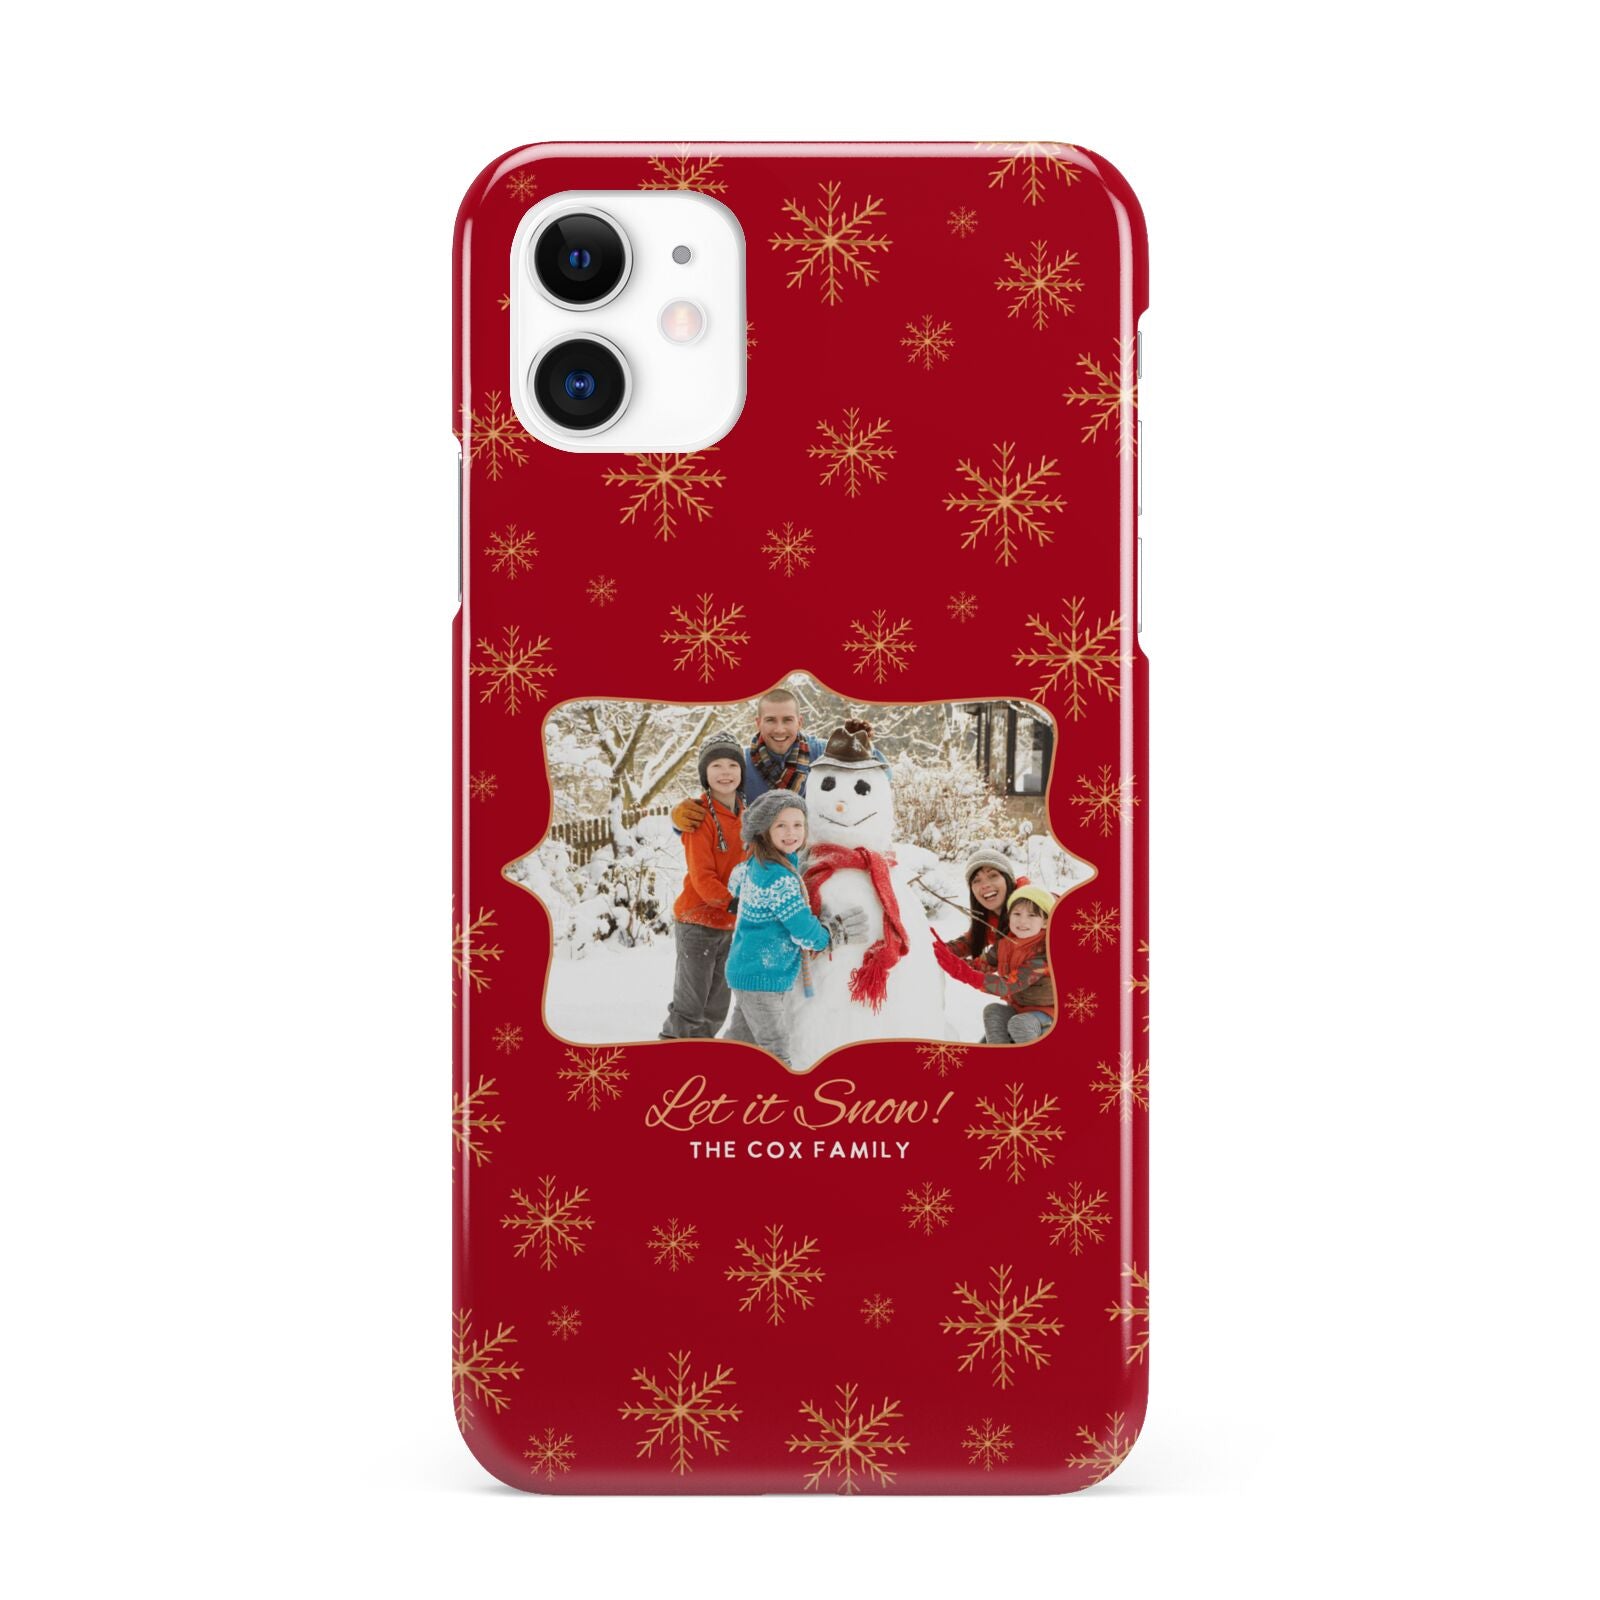 Let it Snow Christmas Photo Upload iPhone 11 3D Snap Case